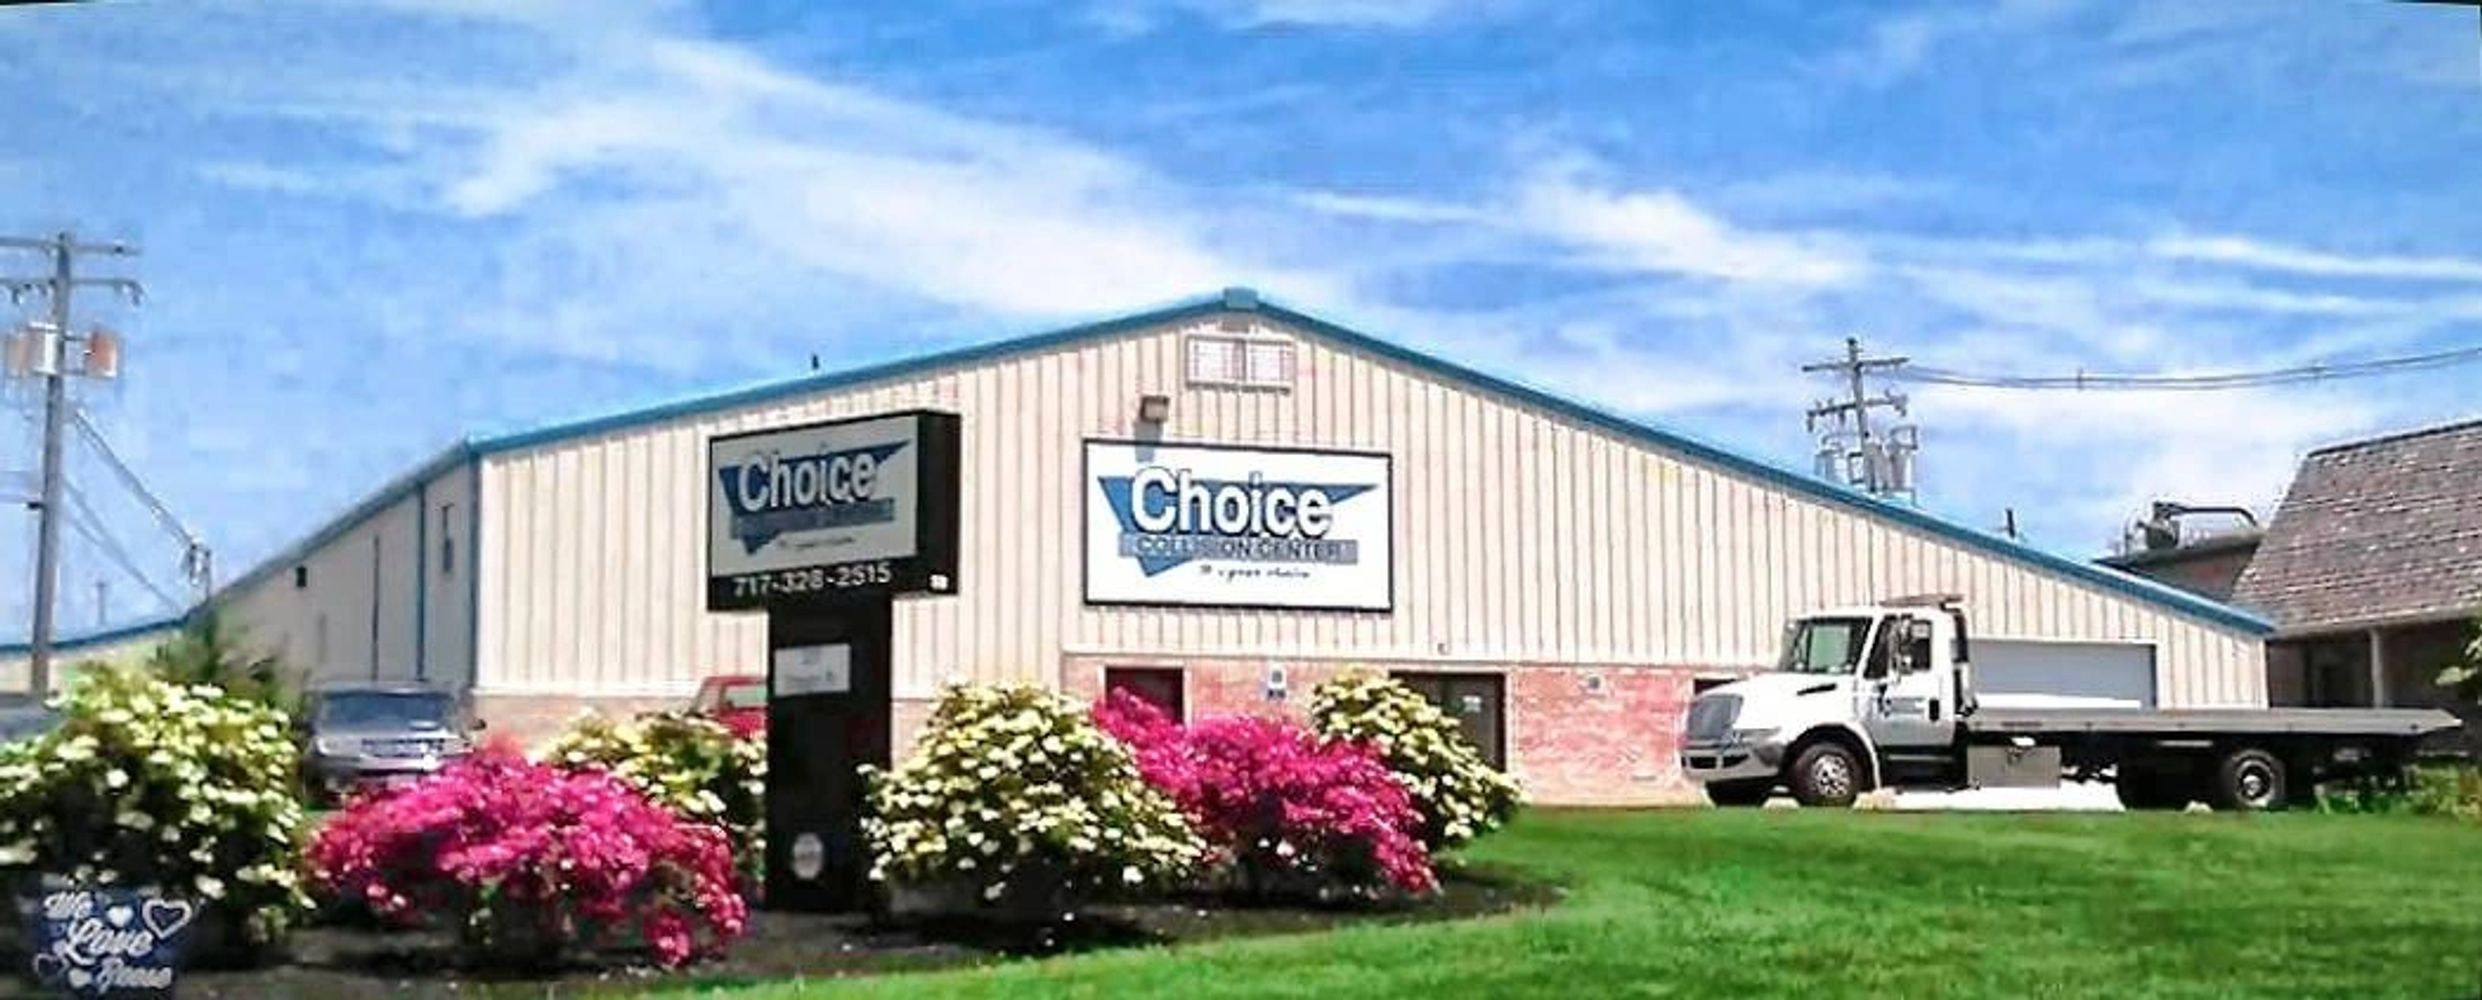 Choice Collision Center Building, Mercersburg, Pennsylvania